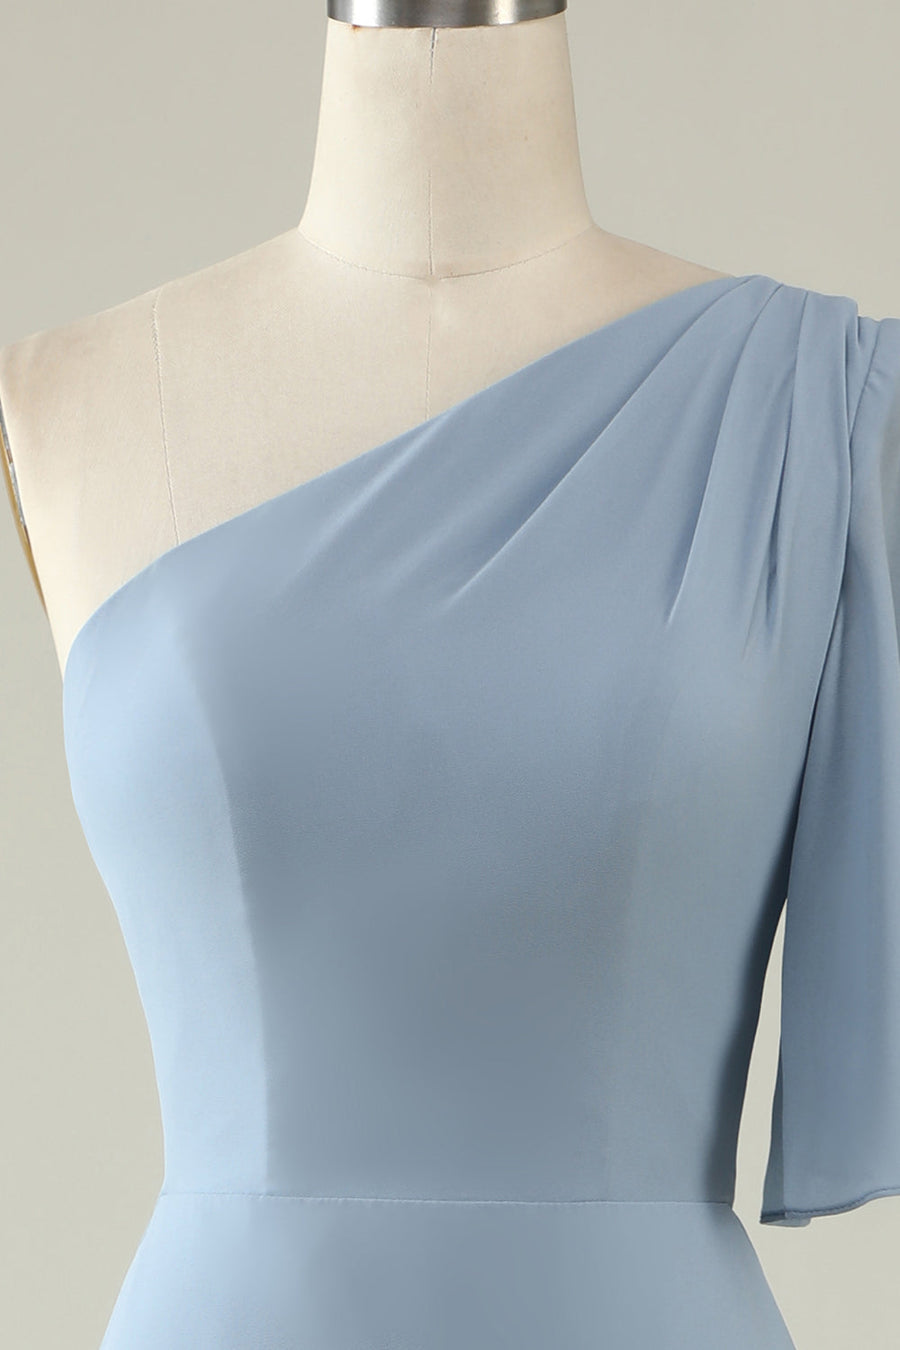 Lace Jewel Neck Short Sleeves Bridesmaid Dress| Plus Size | 60+ Colors